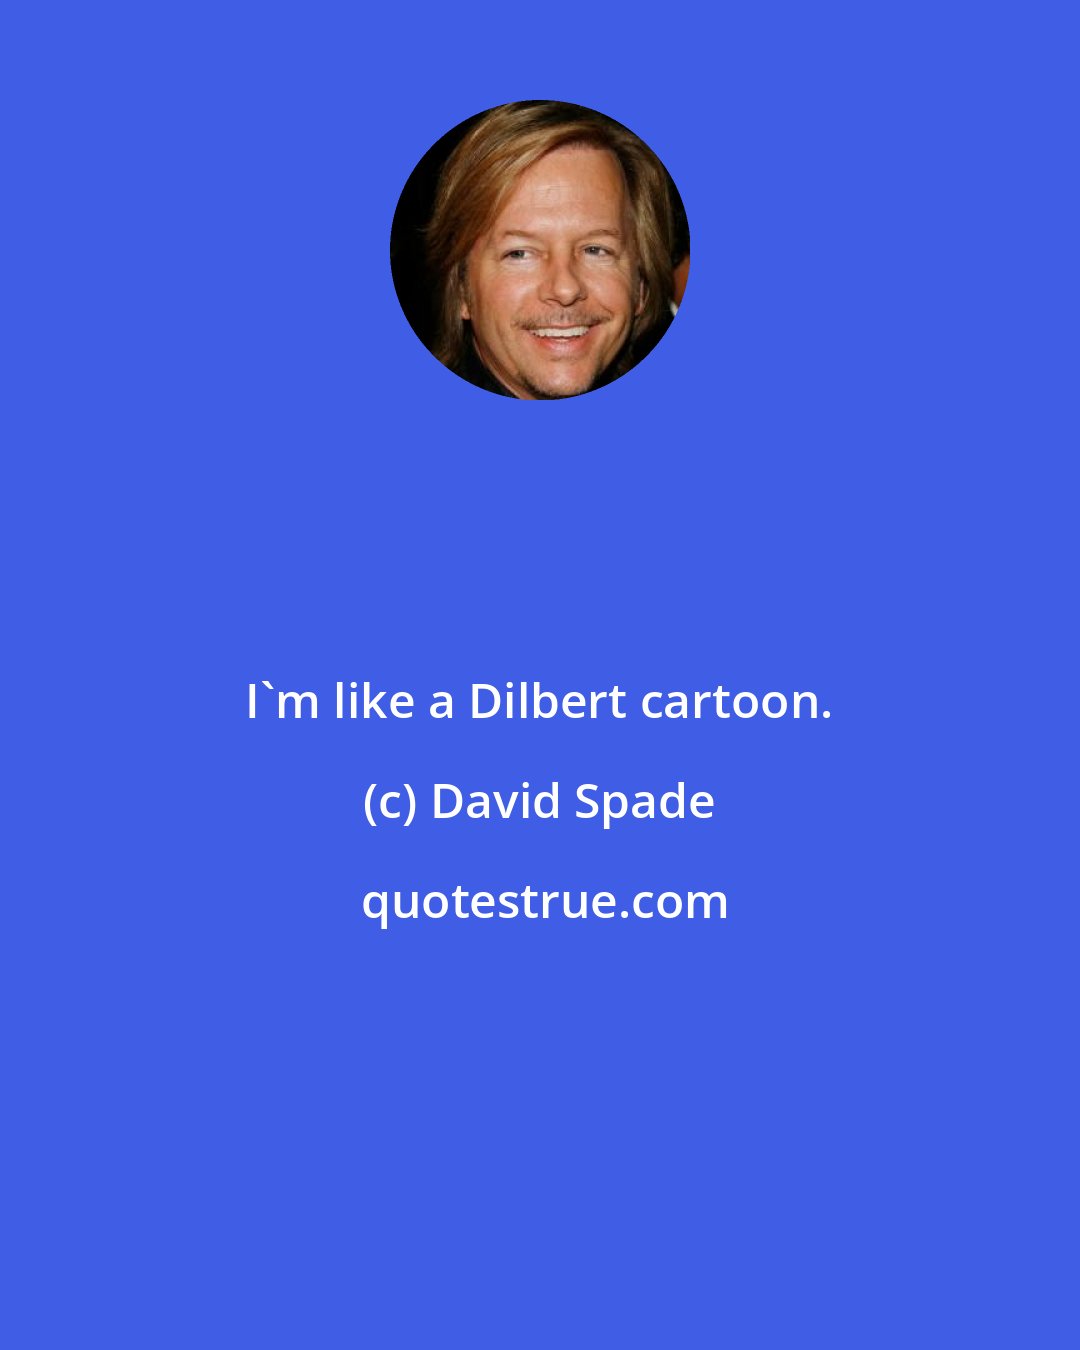 David Spade: I'm like a Dilbert cartoon.